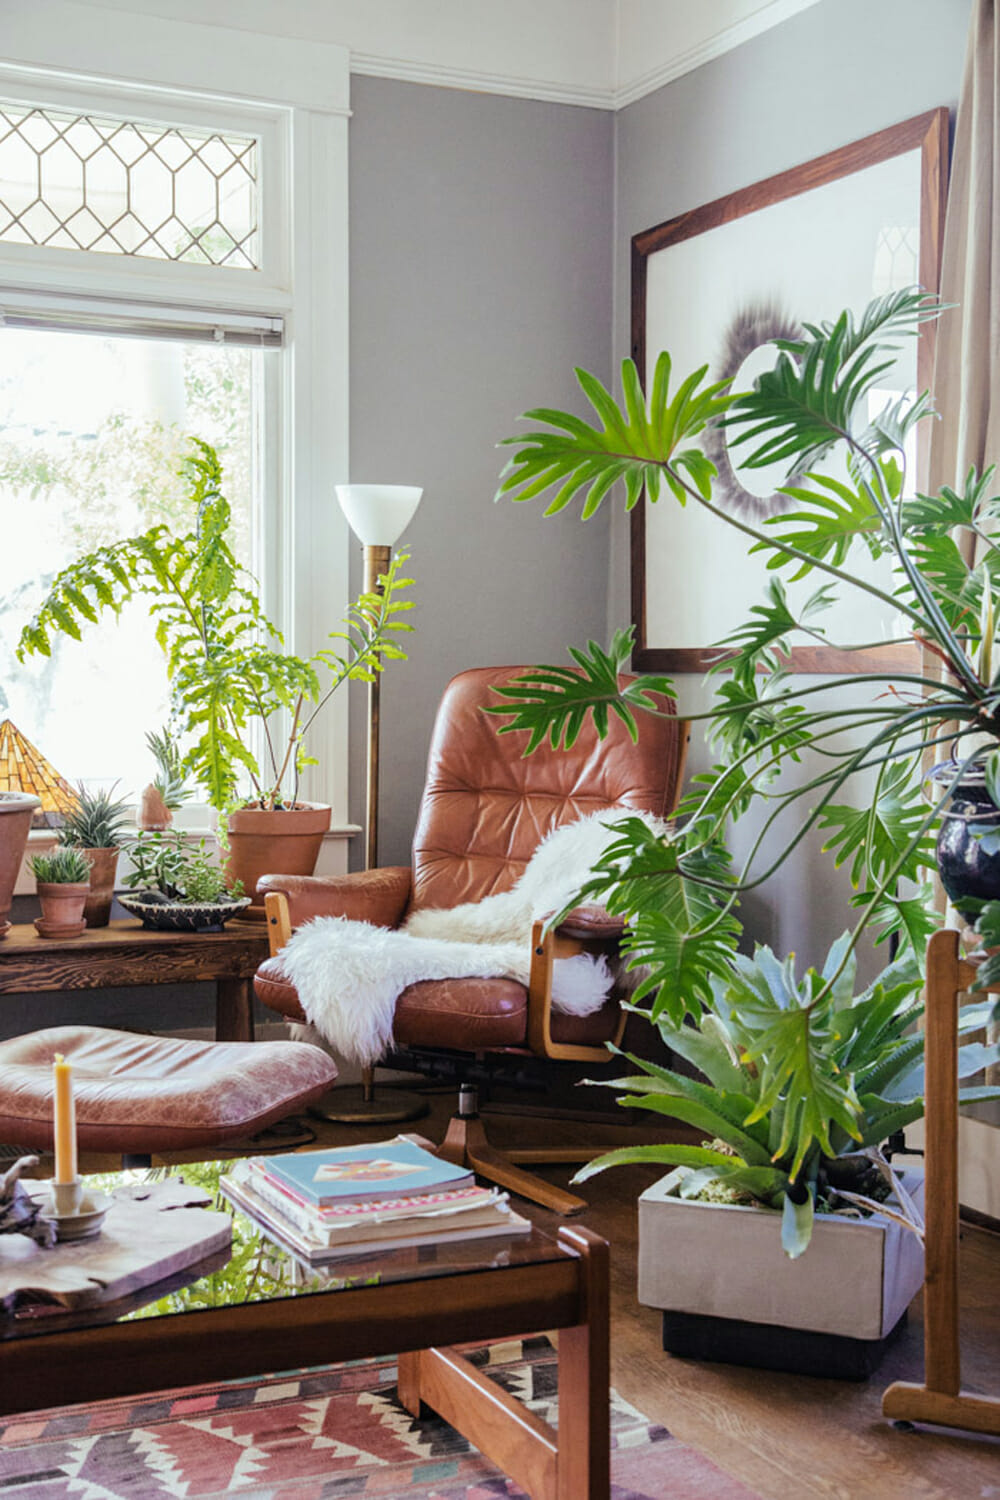 Lush plants surrounding a lounge chair